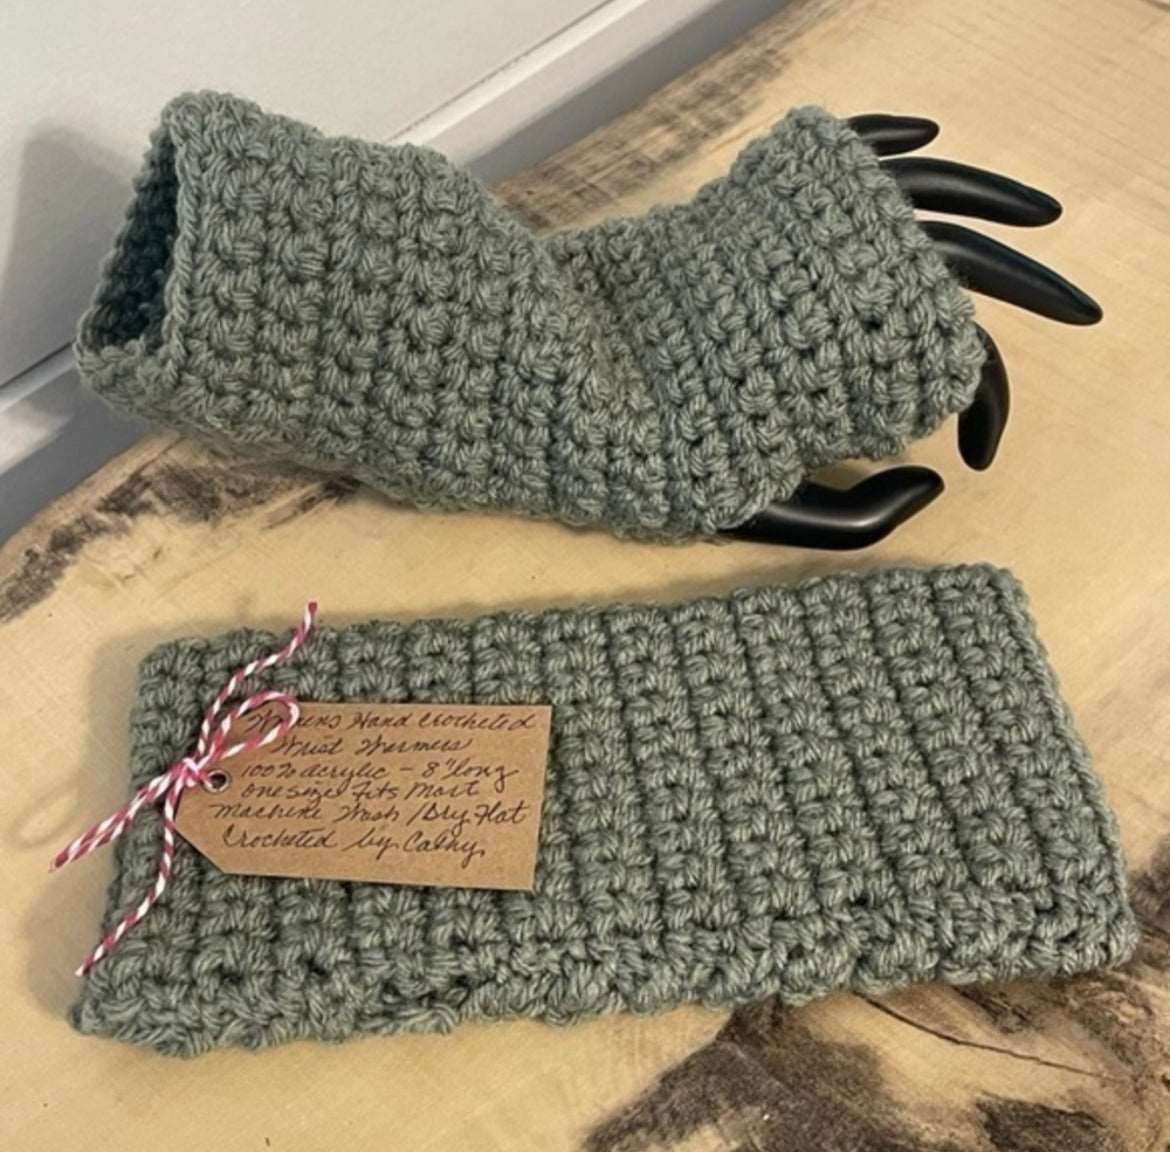 Gaming Texting Fingerless Gloves Eucalyptus Green Gray Grey Crochet Knit Fall Winter Writing Tech Wrist Warmers